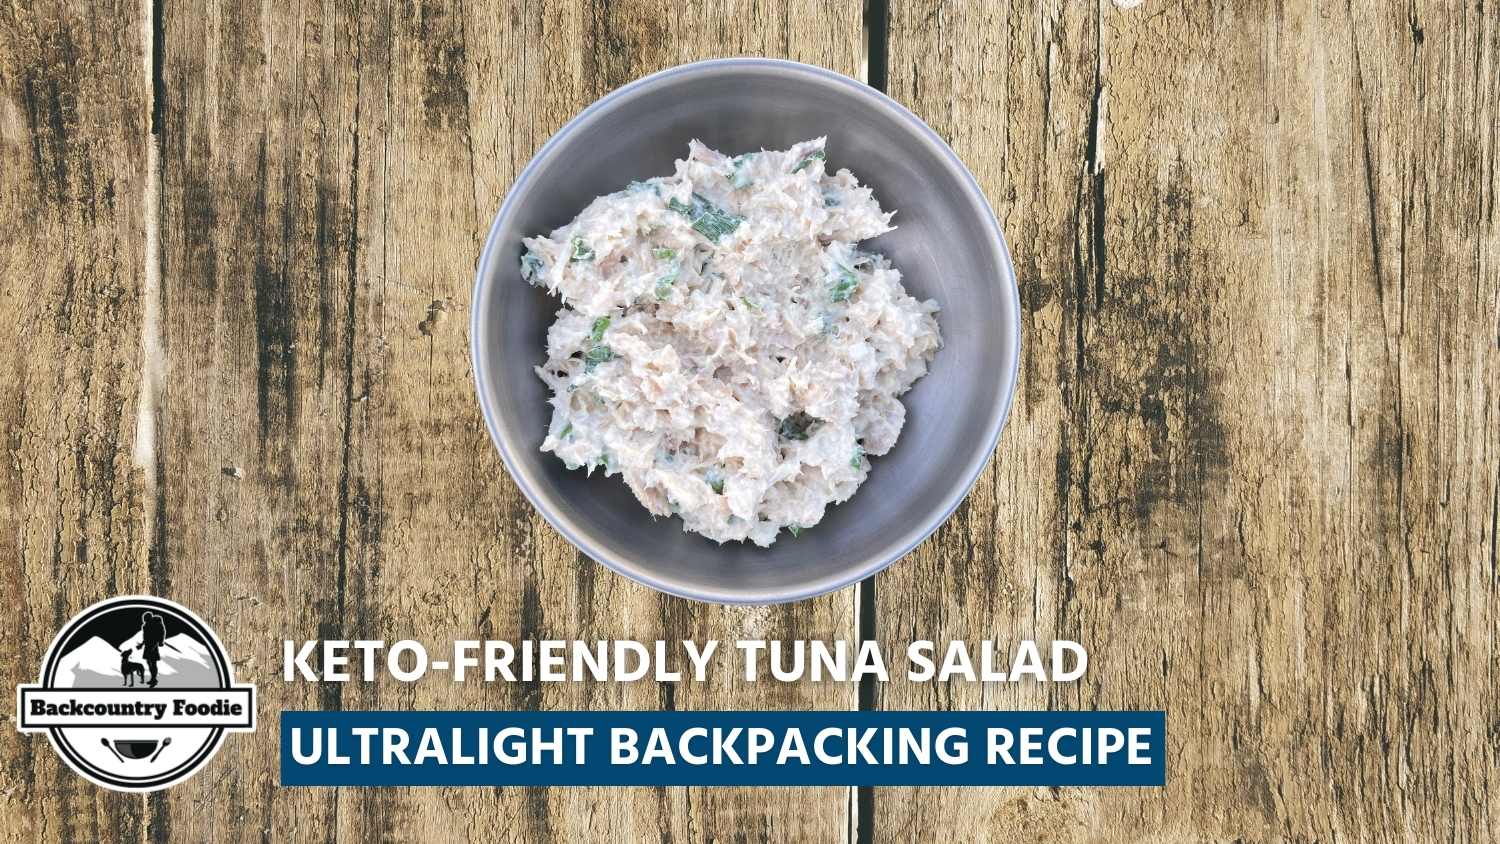 Backcountry Foodie Keto Friendly Tuna Salad Backpacking Recipe